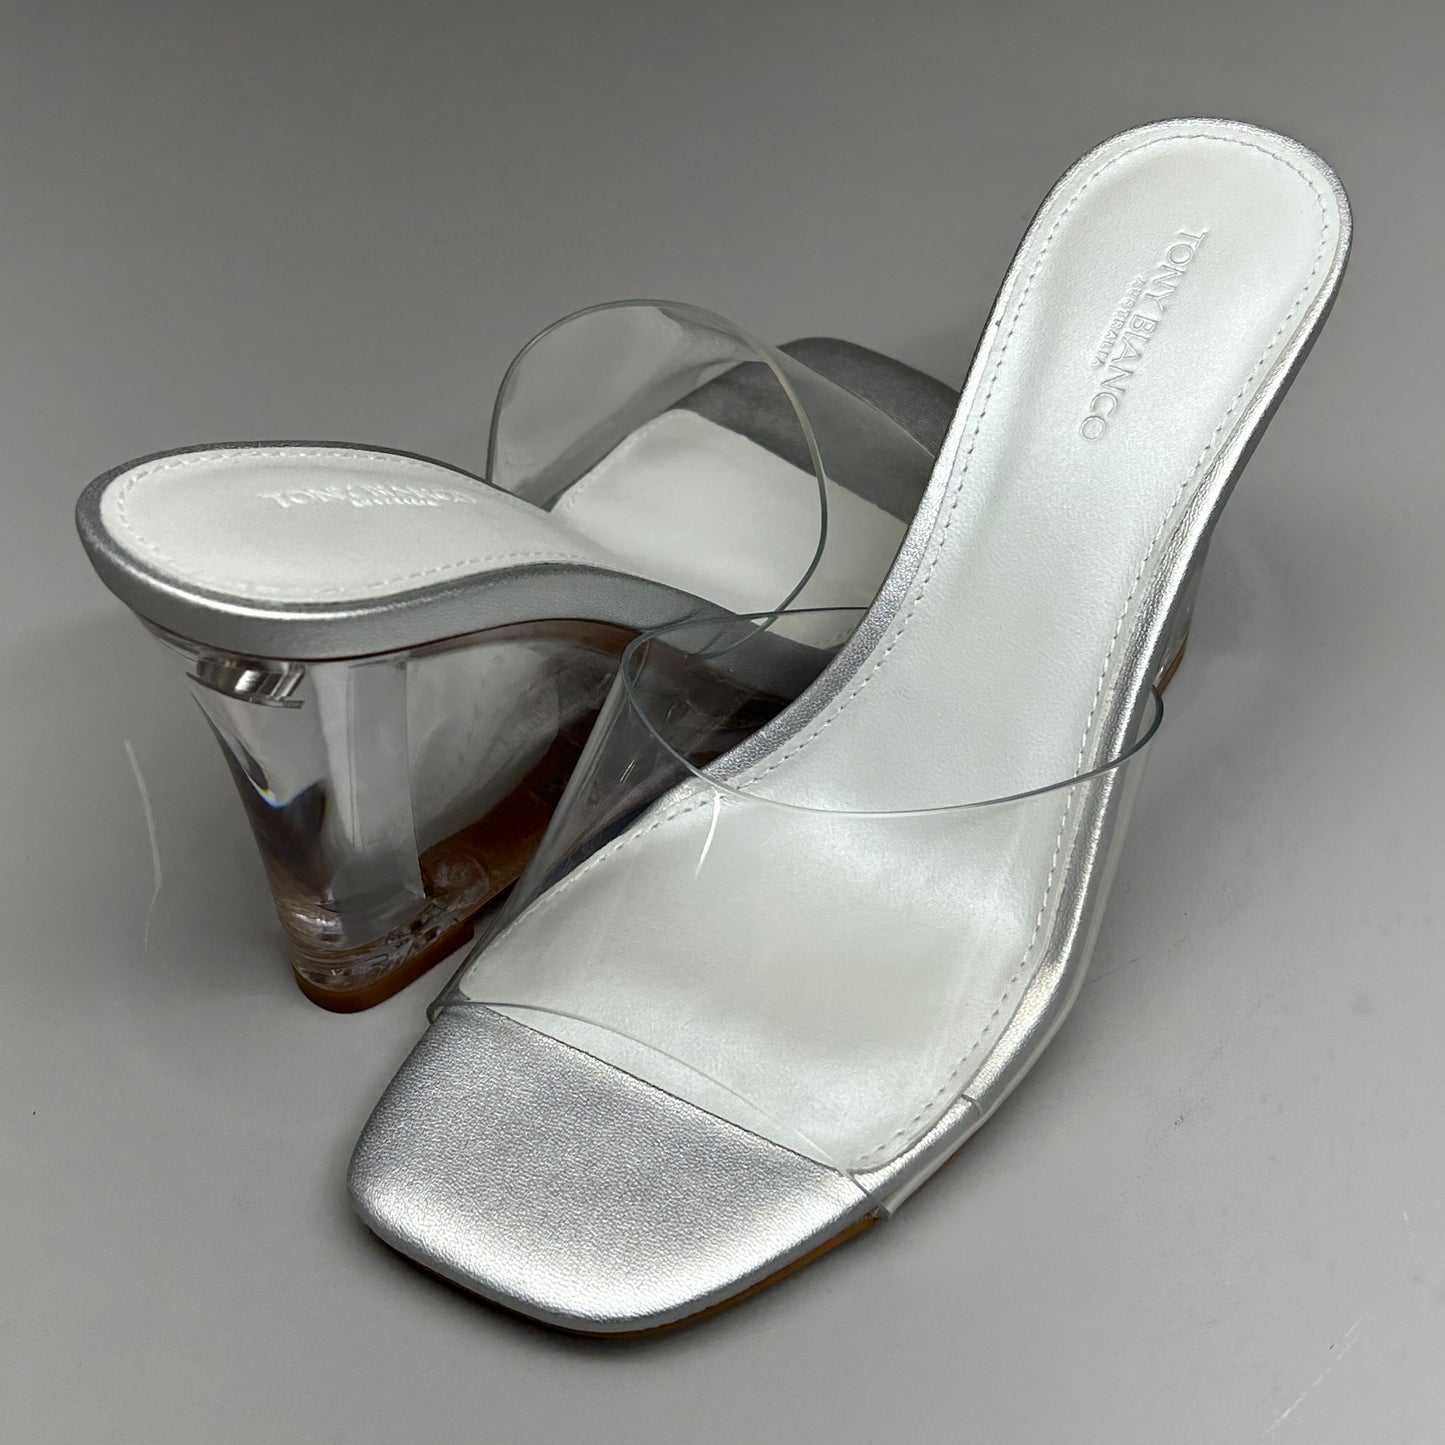 TONY BIANCO Alessi Clear Vinylite/Silver Wedges Women's Heels Sz 10 (New)